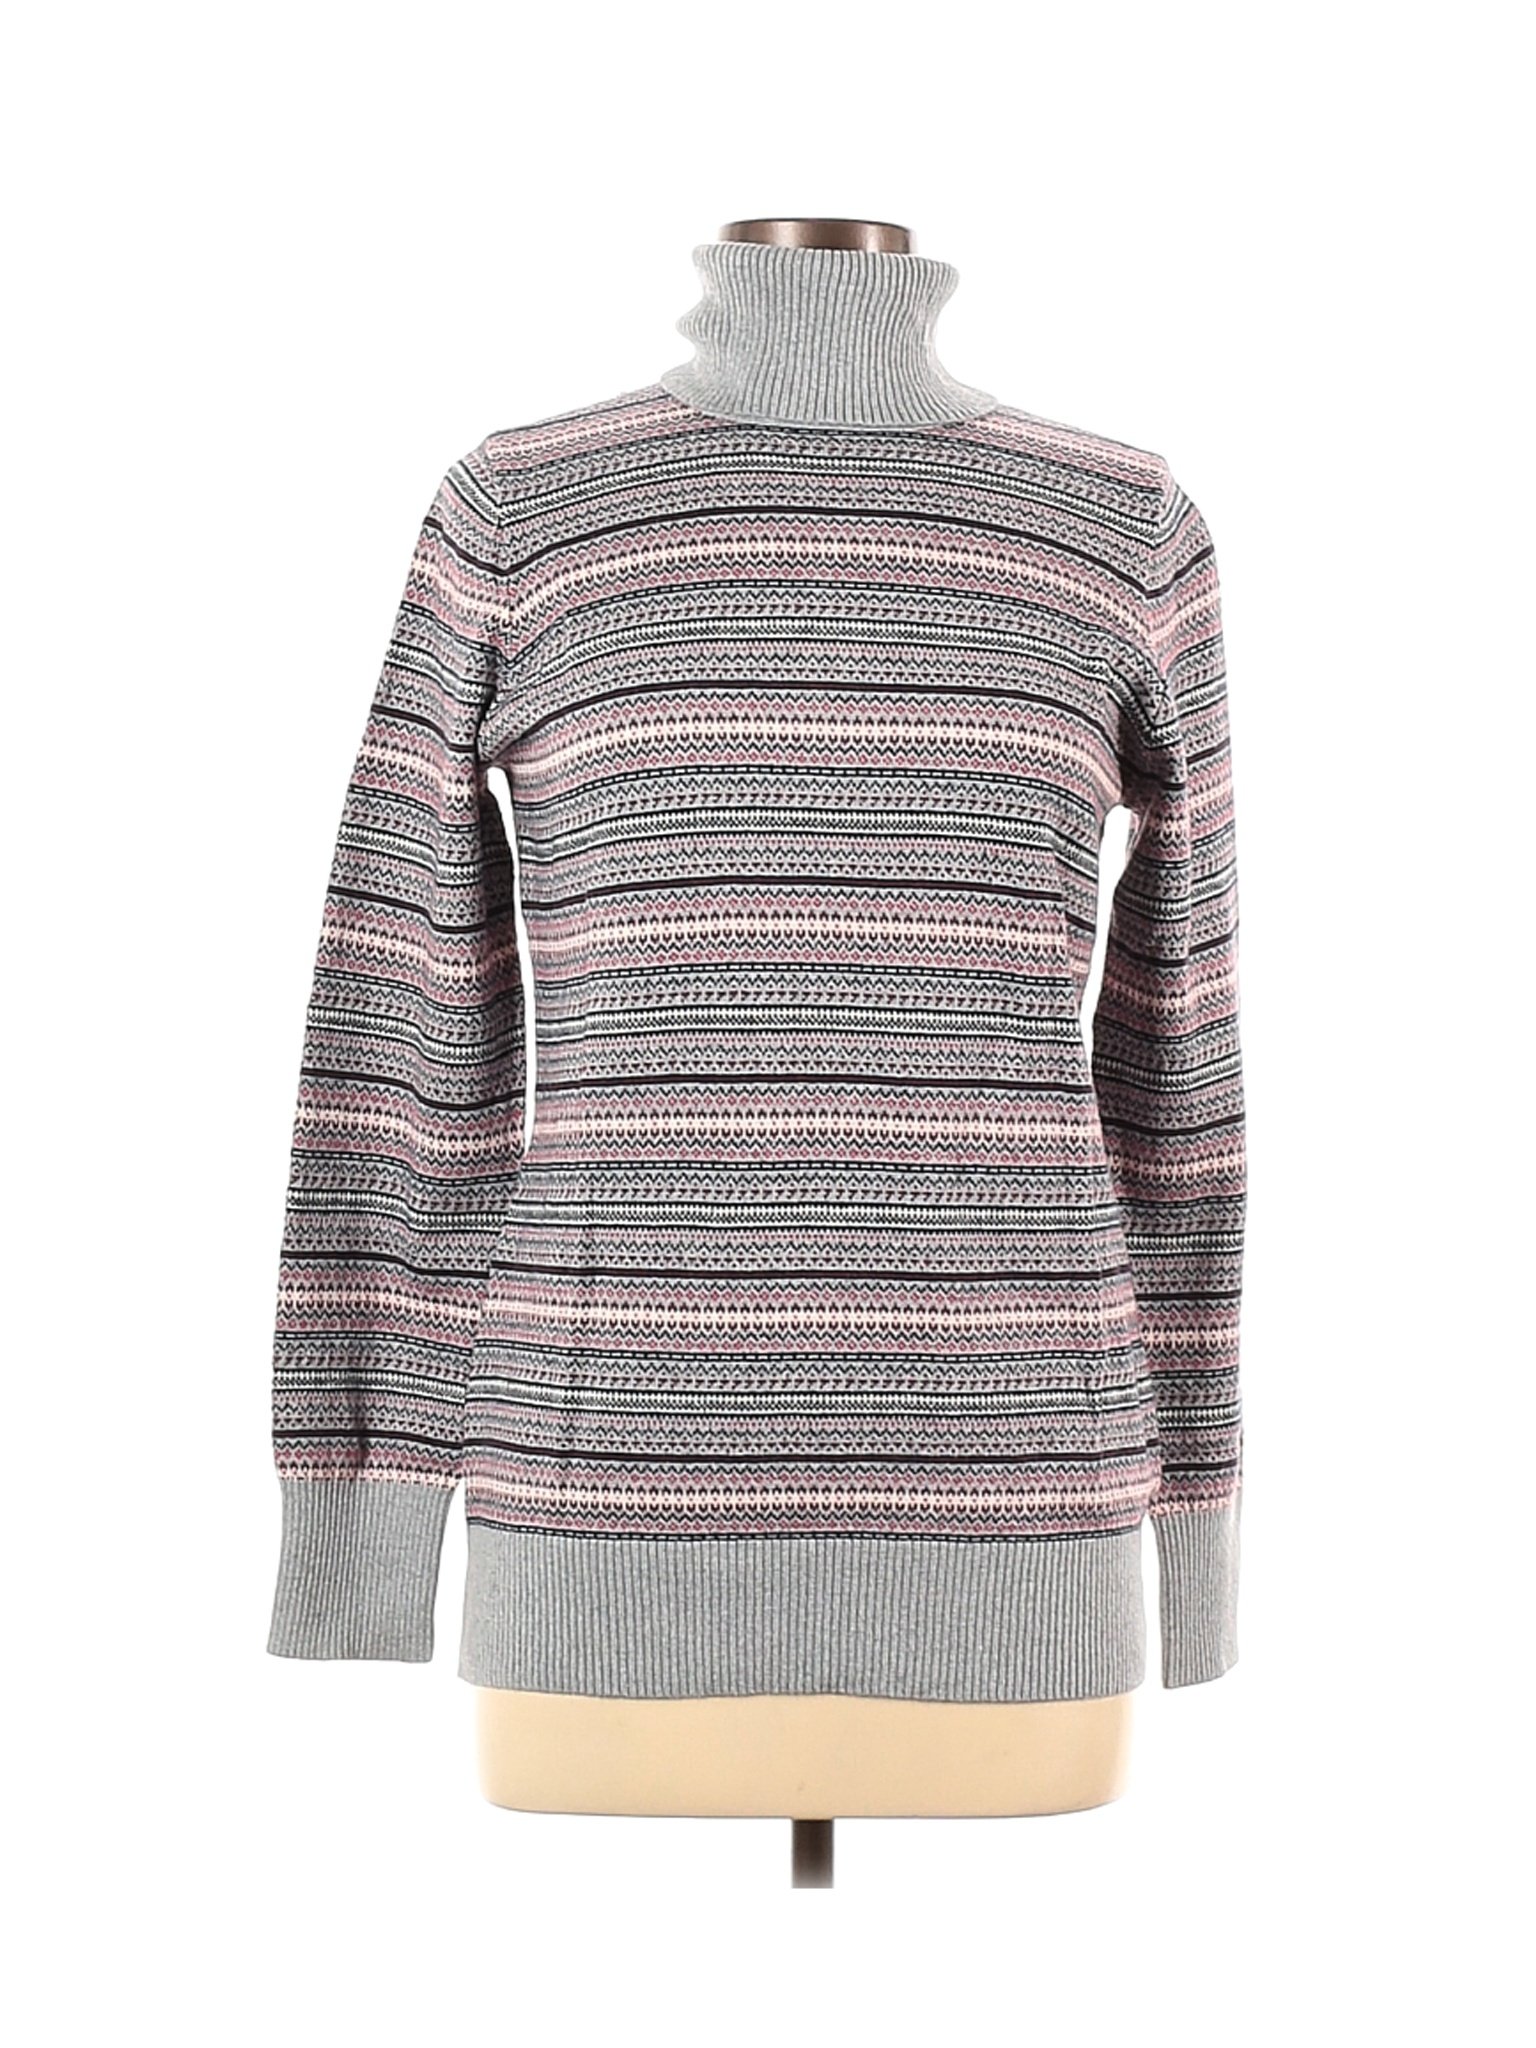 L.L.Bean Women Gray Turtleneck Sweater M | eBay